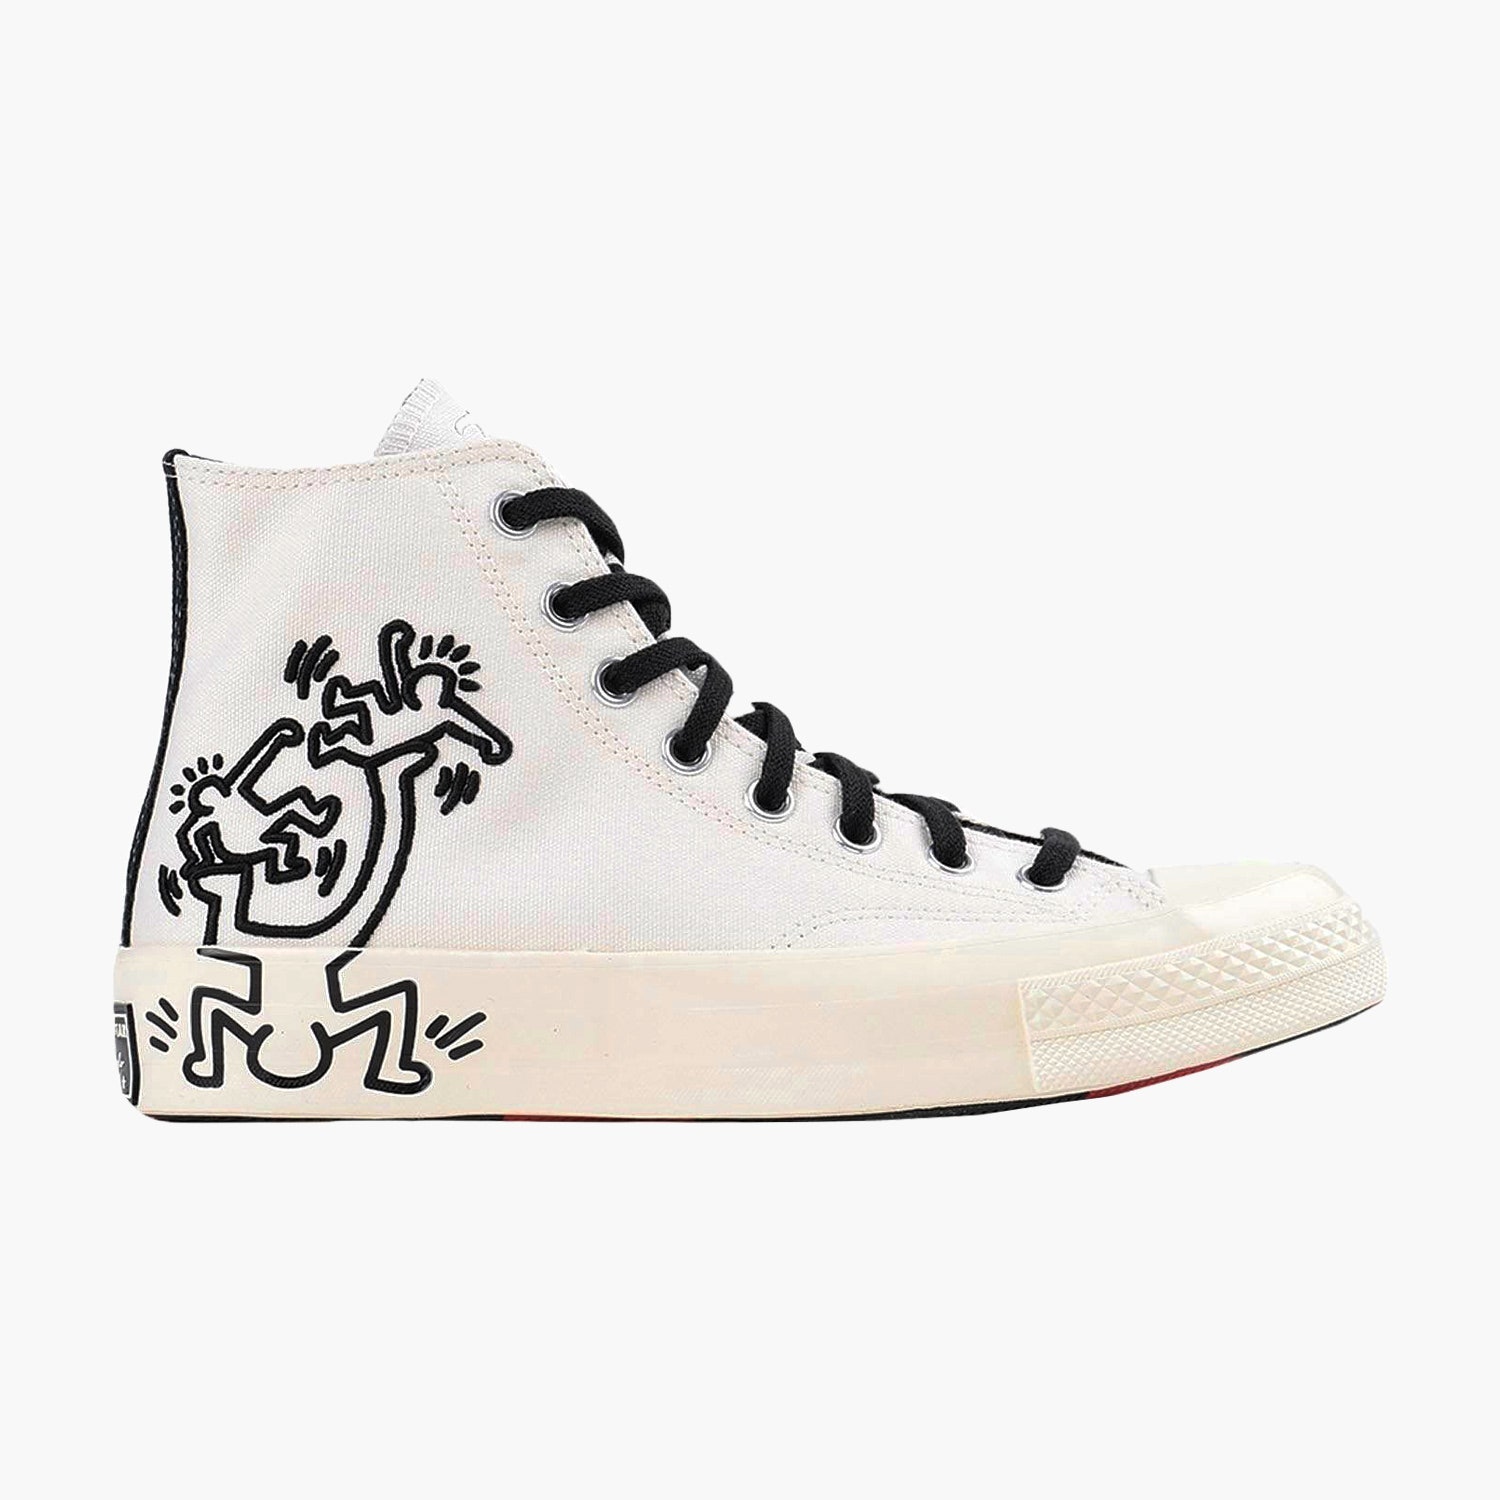 Converse x Keith Haring 10400 рублей yoox.com